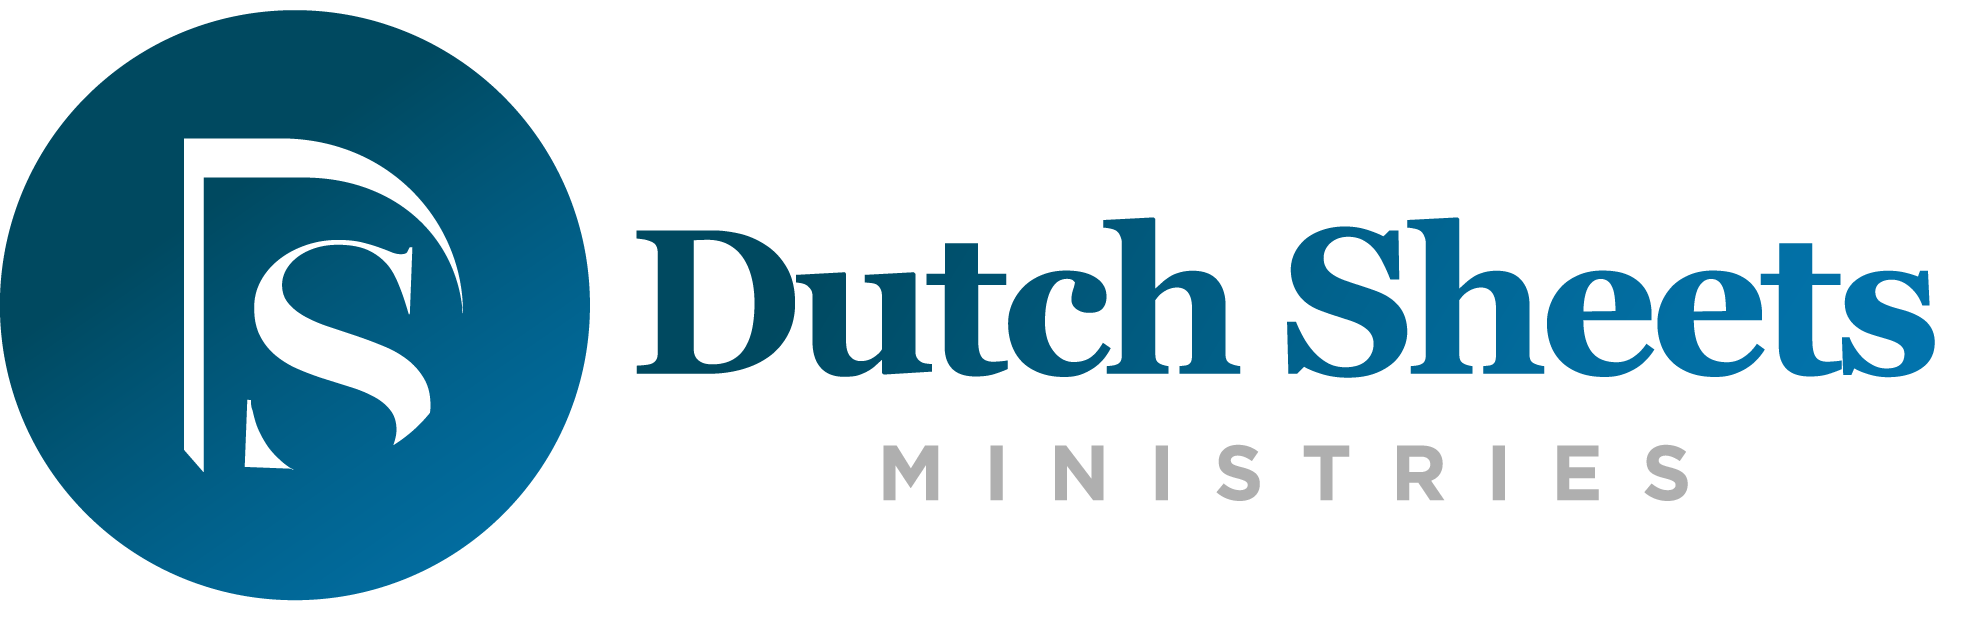 https://kairos2017.com/wp-content/uploads/2017/08/Dutch-Sheets-Ministries.png